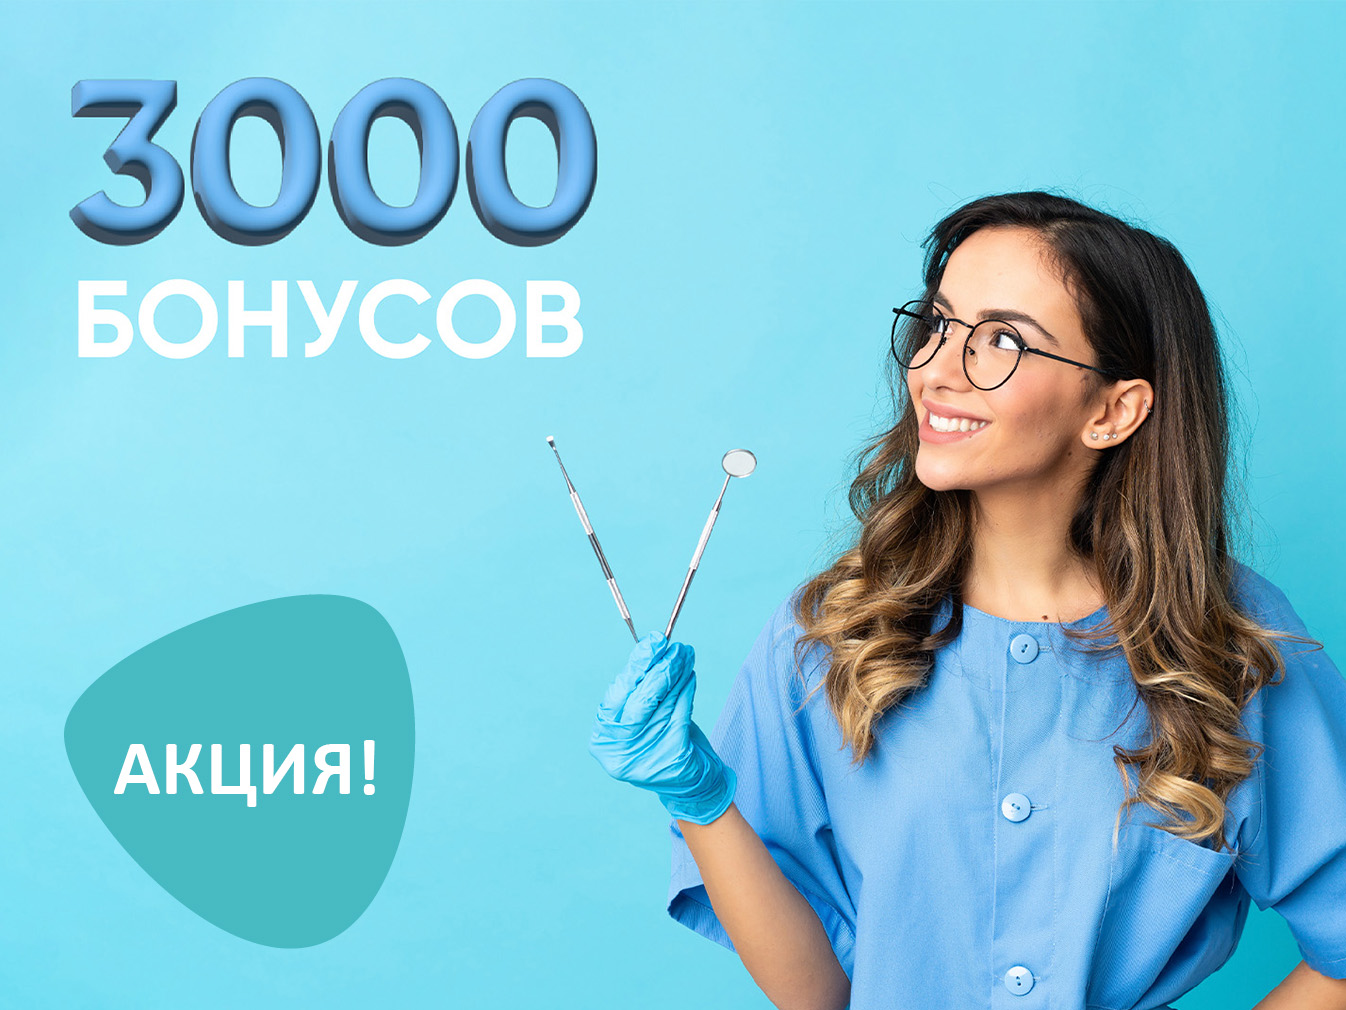 Welcome-бонус. Дарим 3000 бонусных руб. на стоматологию! (Акция завершена)